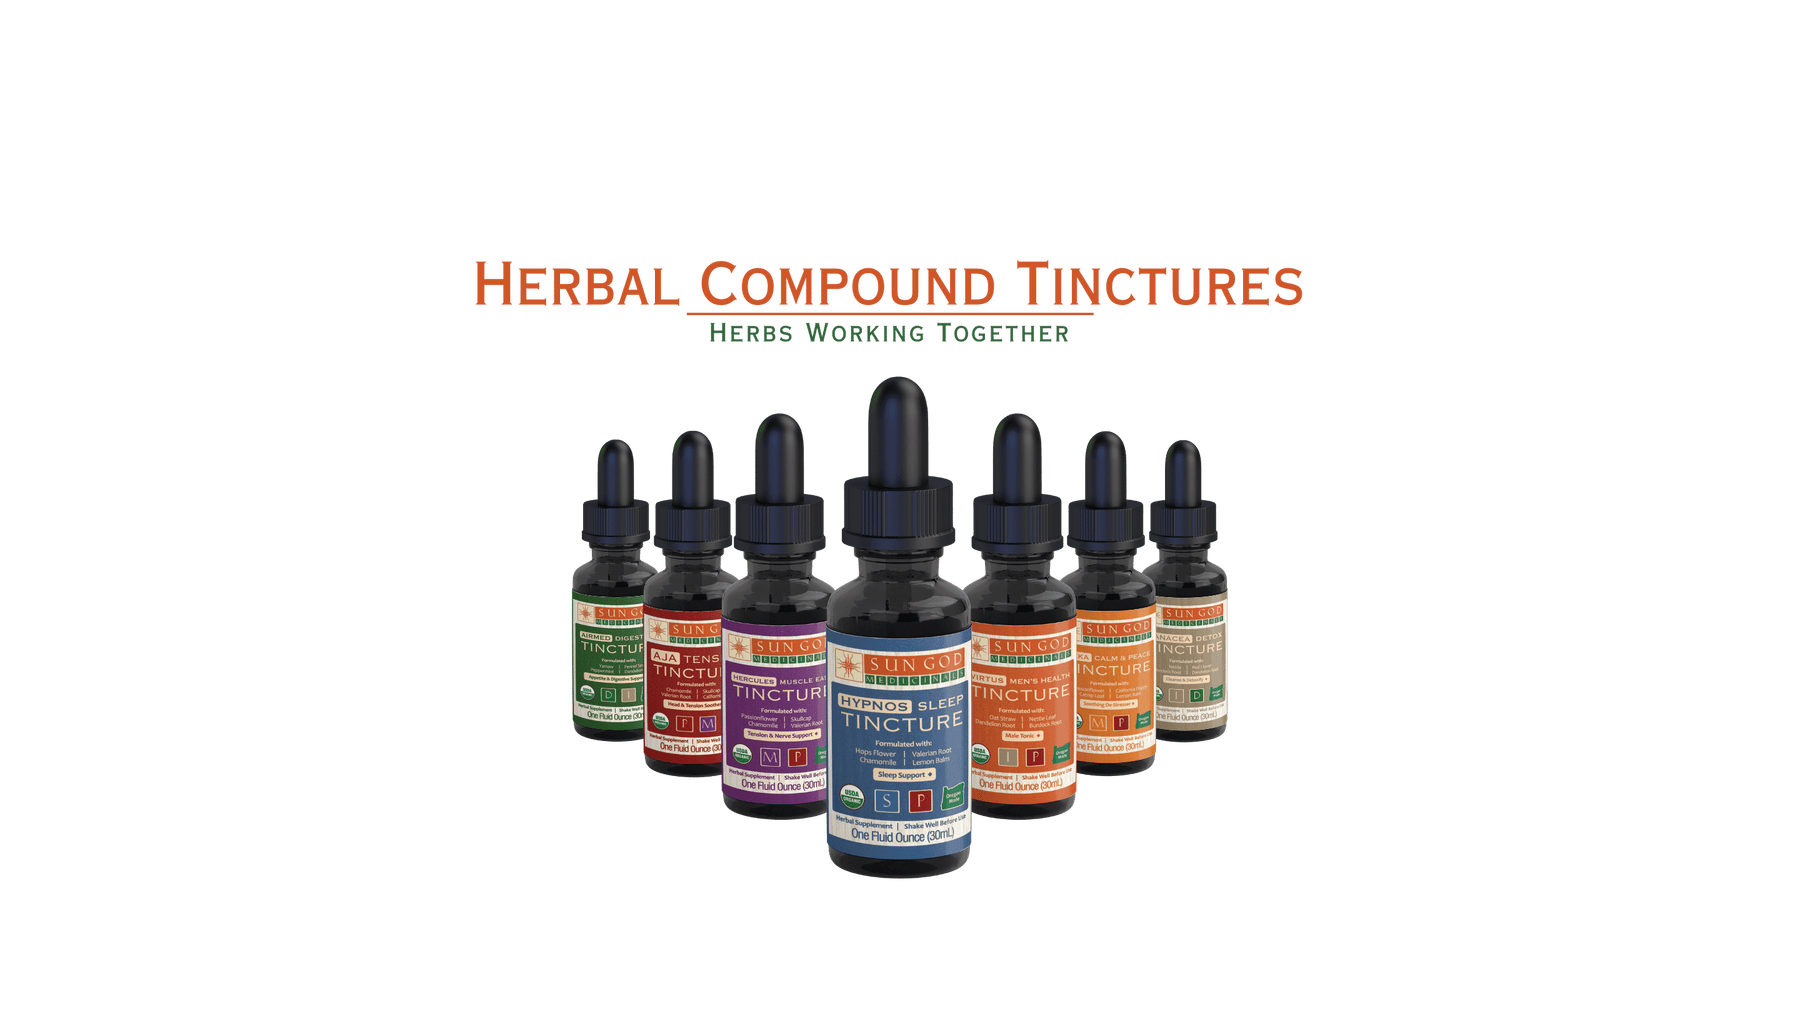 Herbal Compound Tinctures by Sun God Medicinals, Legend Lines